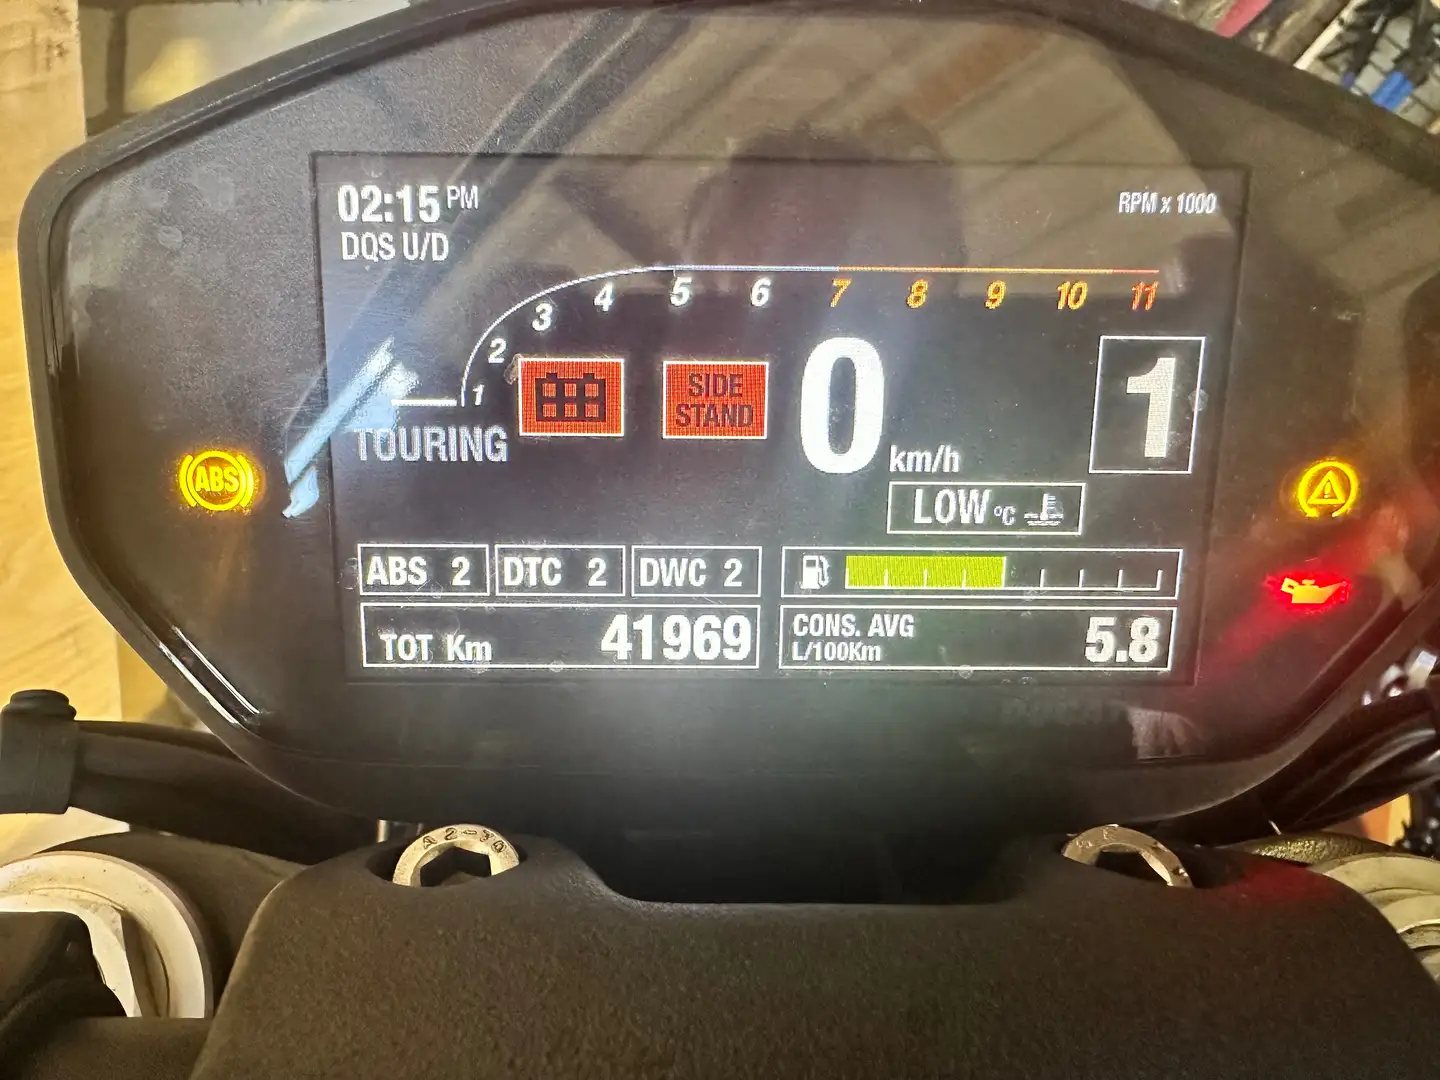 Ducati Monster 1200 Roşu - 2